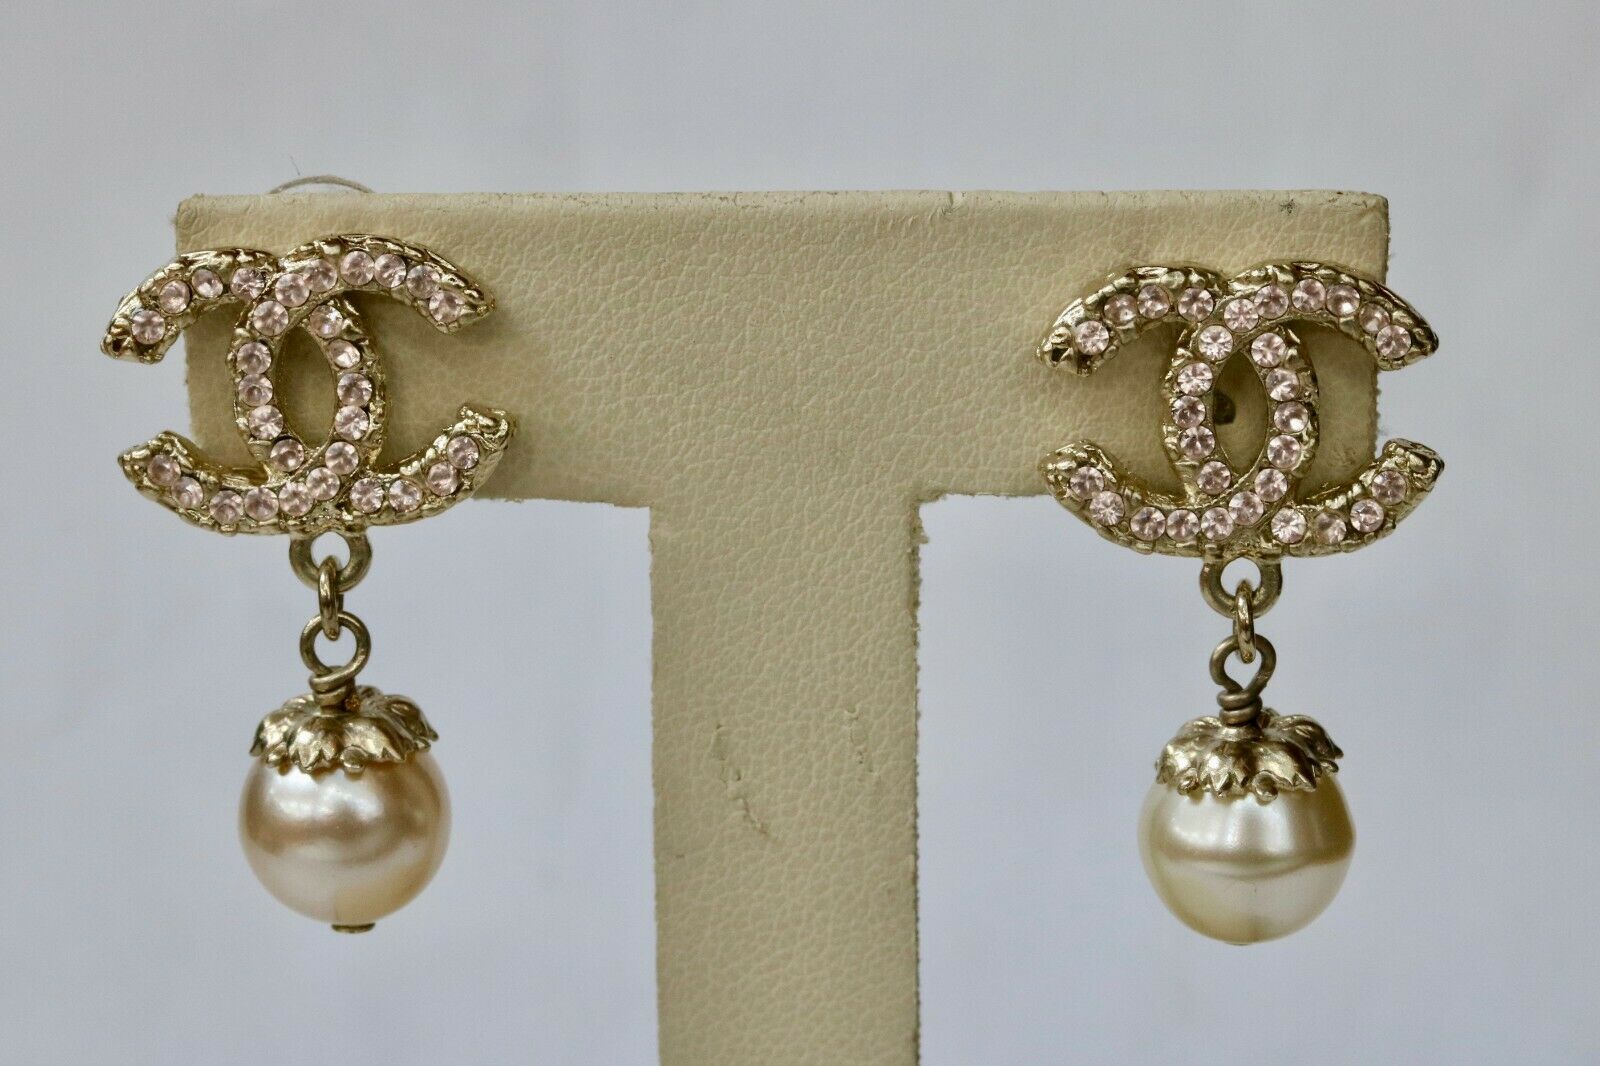 Chanel 22K CC Logo Drop Earrings Crystal/Pearl Light Gold Tone